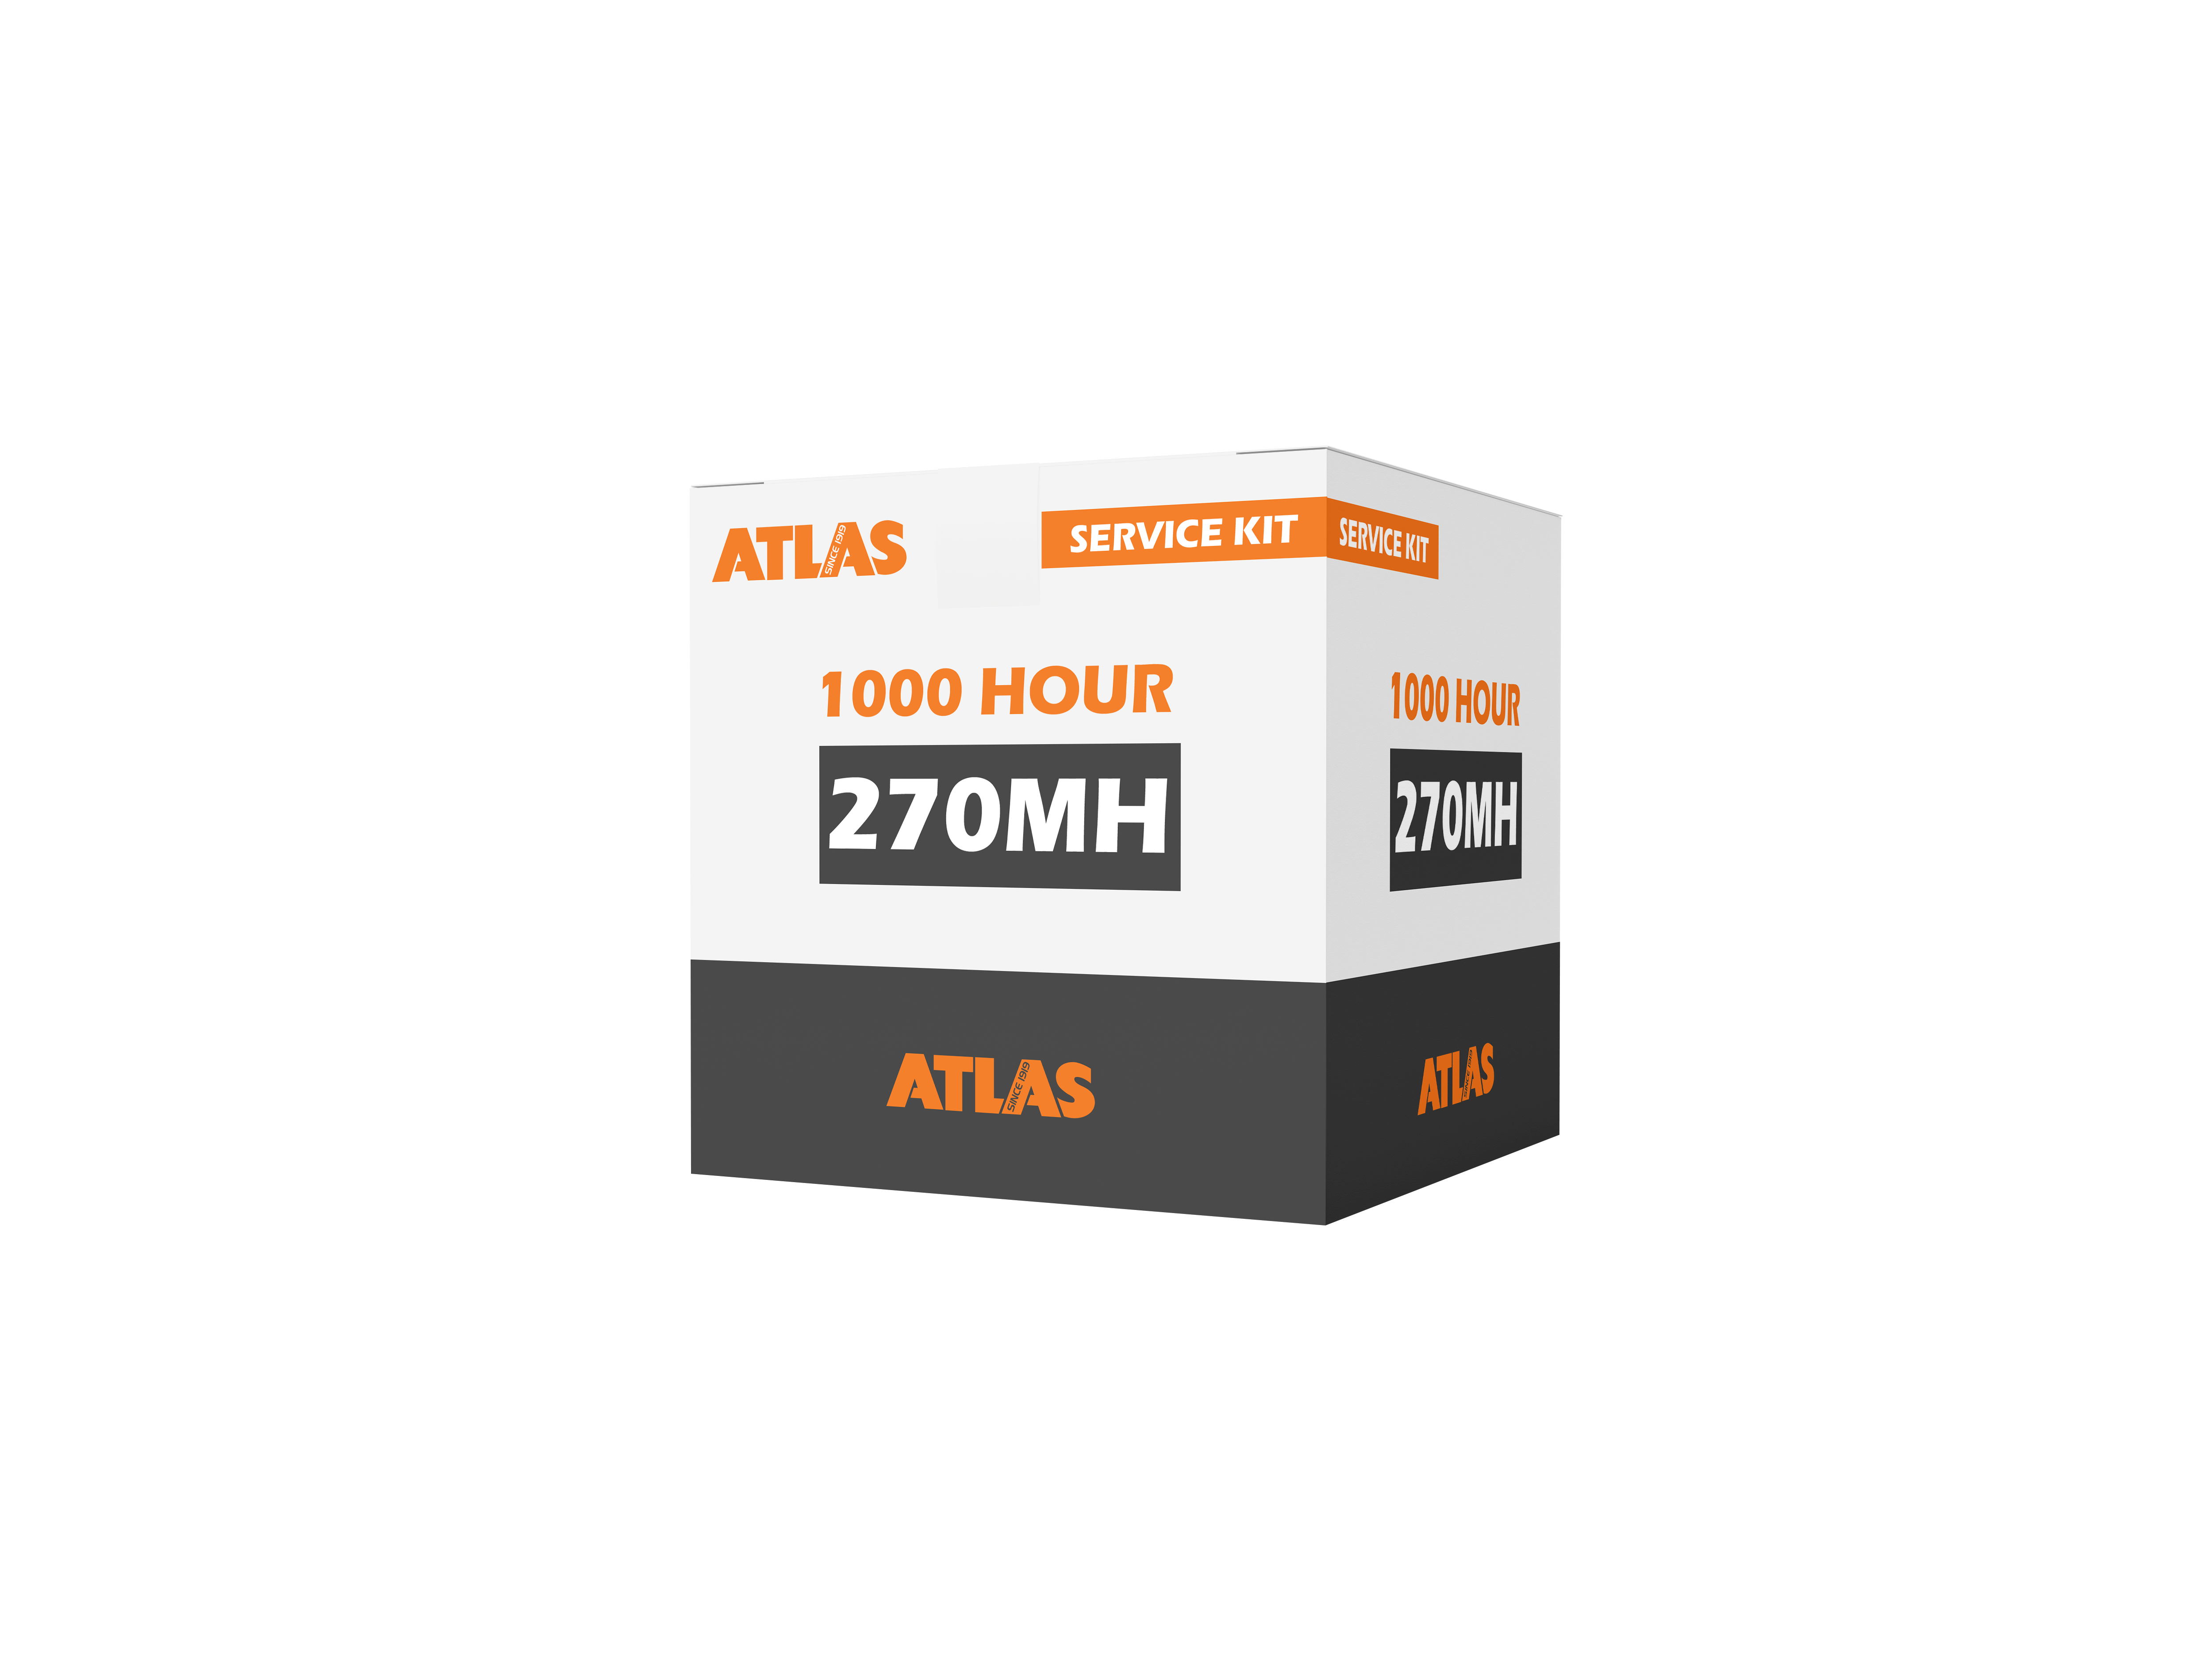 Atlas 270MH 1000 Hour Service Kit (Tier 3 Engine)